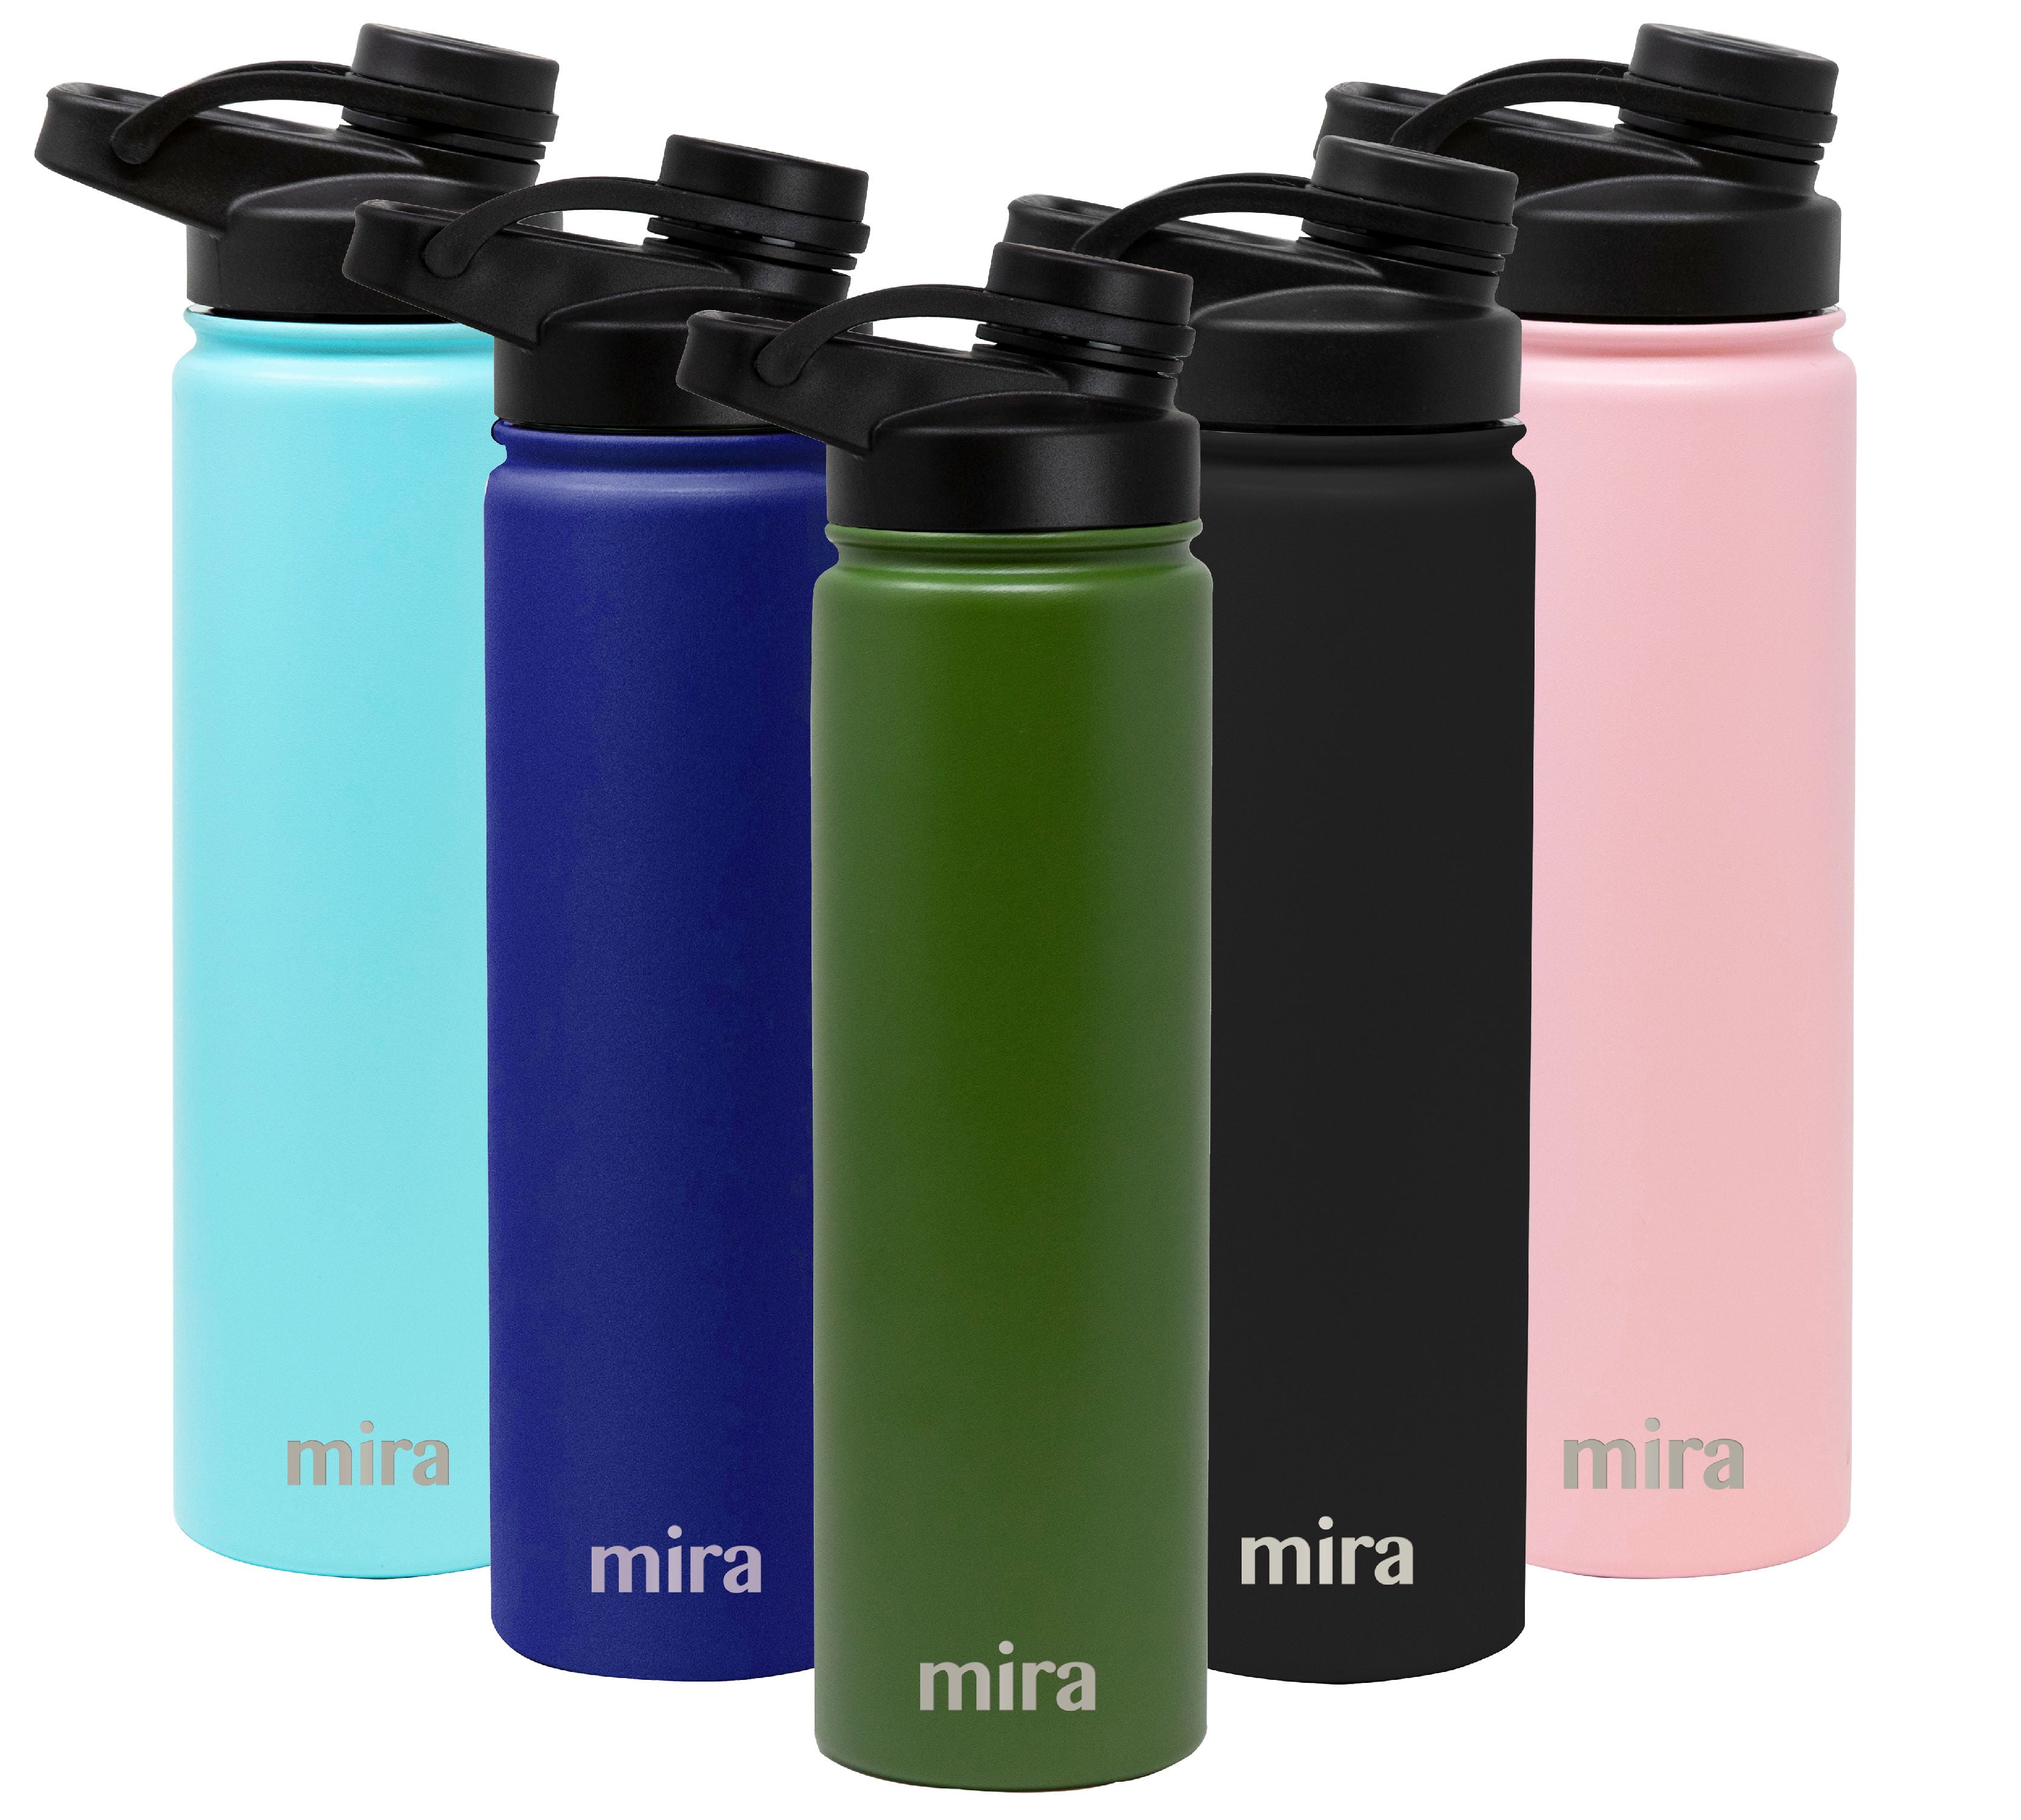 MIRA 24 oz Stainless Steel Water Bottle